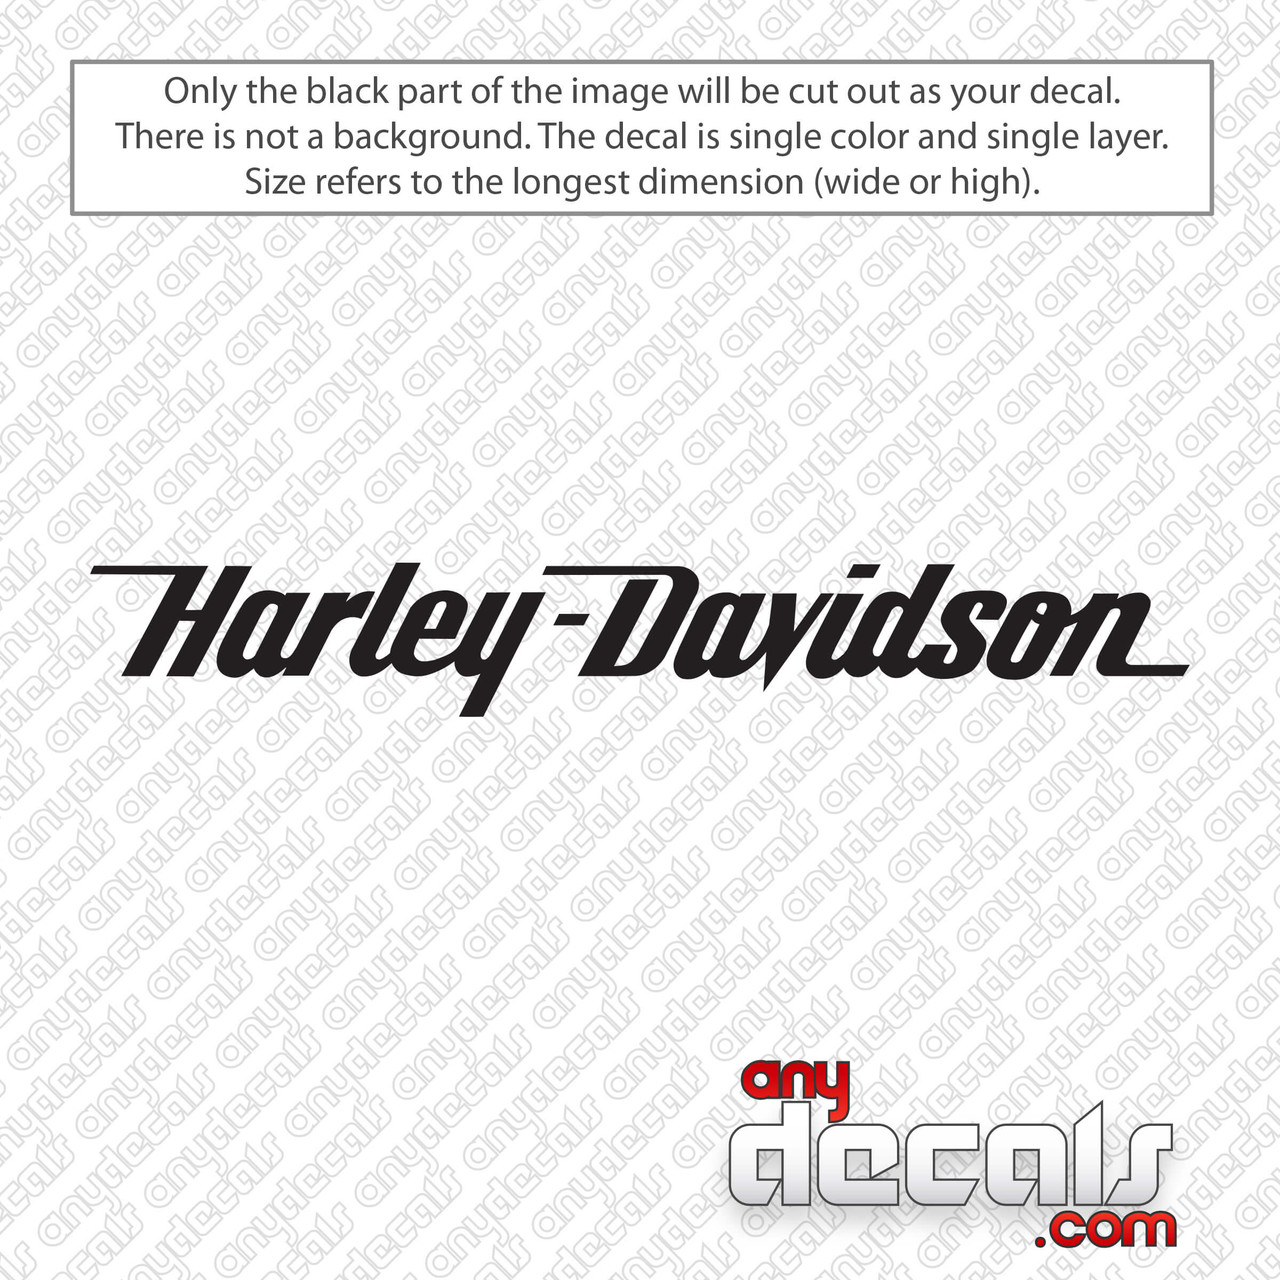 Harley Davidson Text Logo Decal Sticker